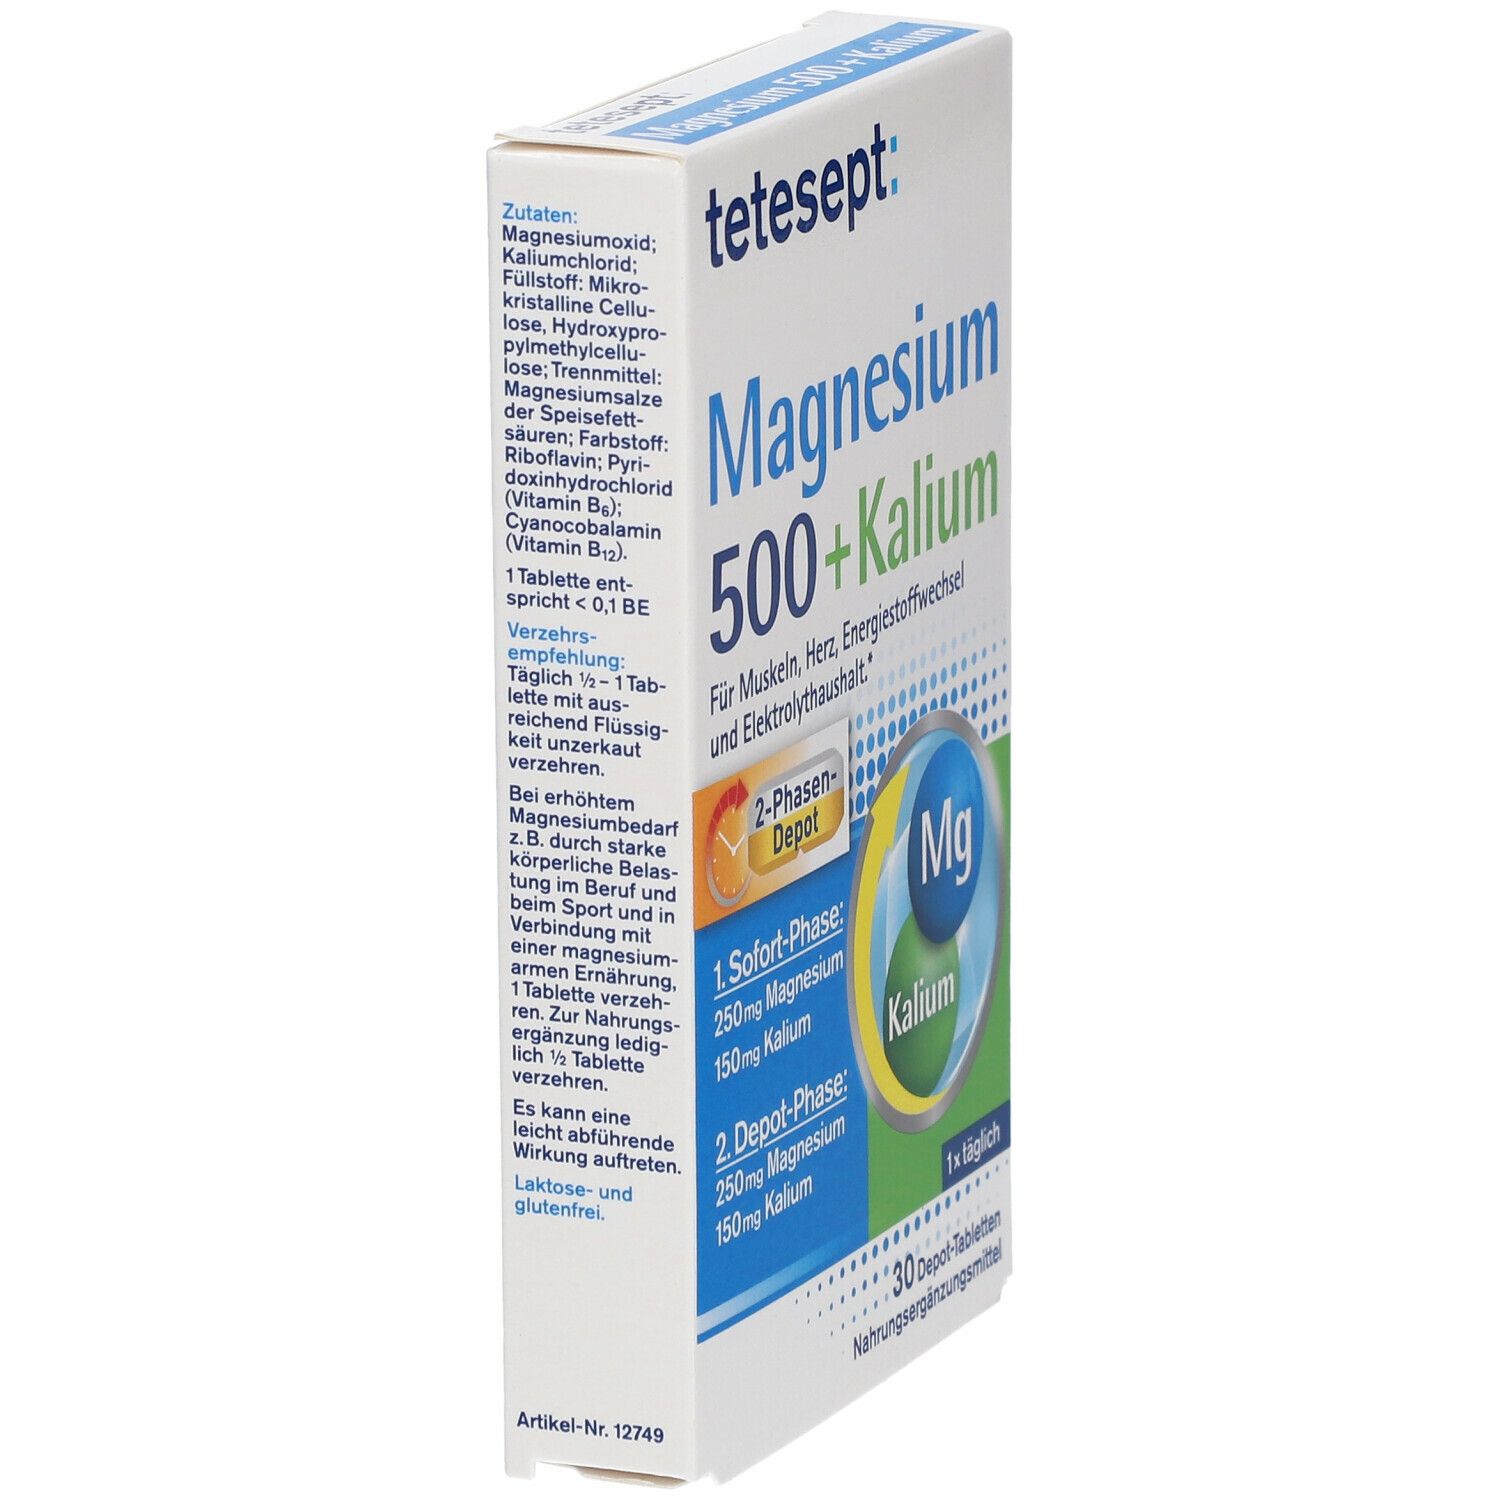 tetesept® Magnesium 500 + Kalium